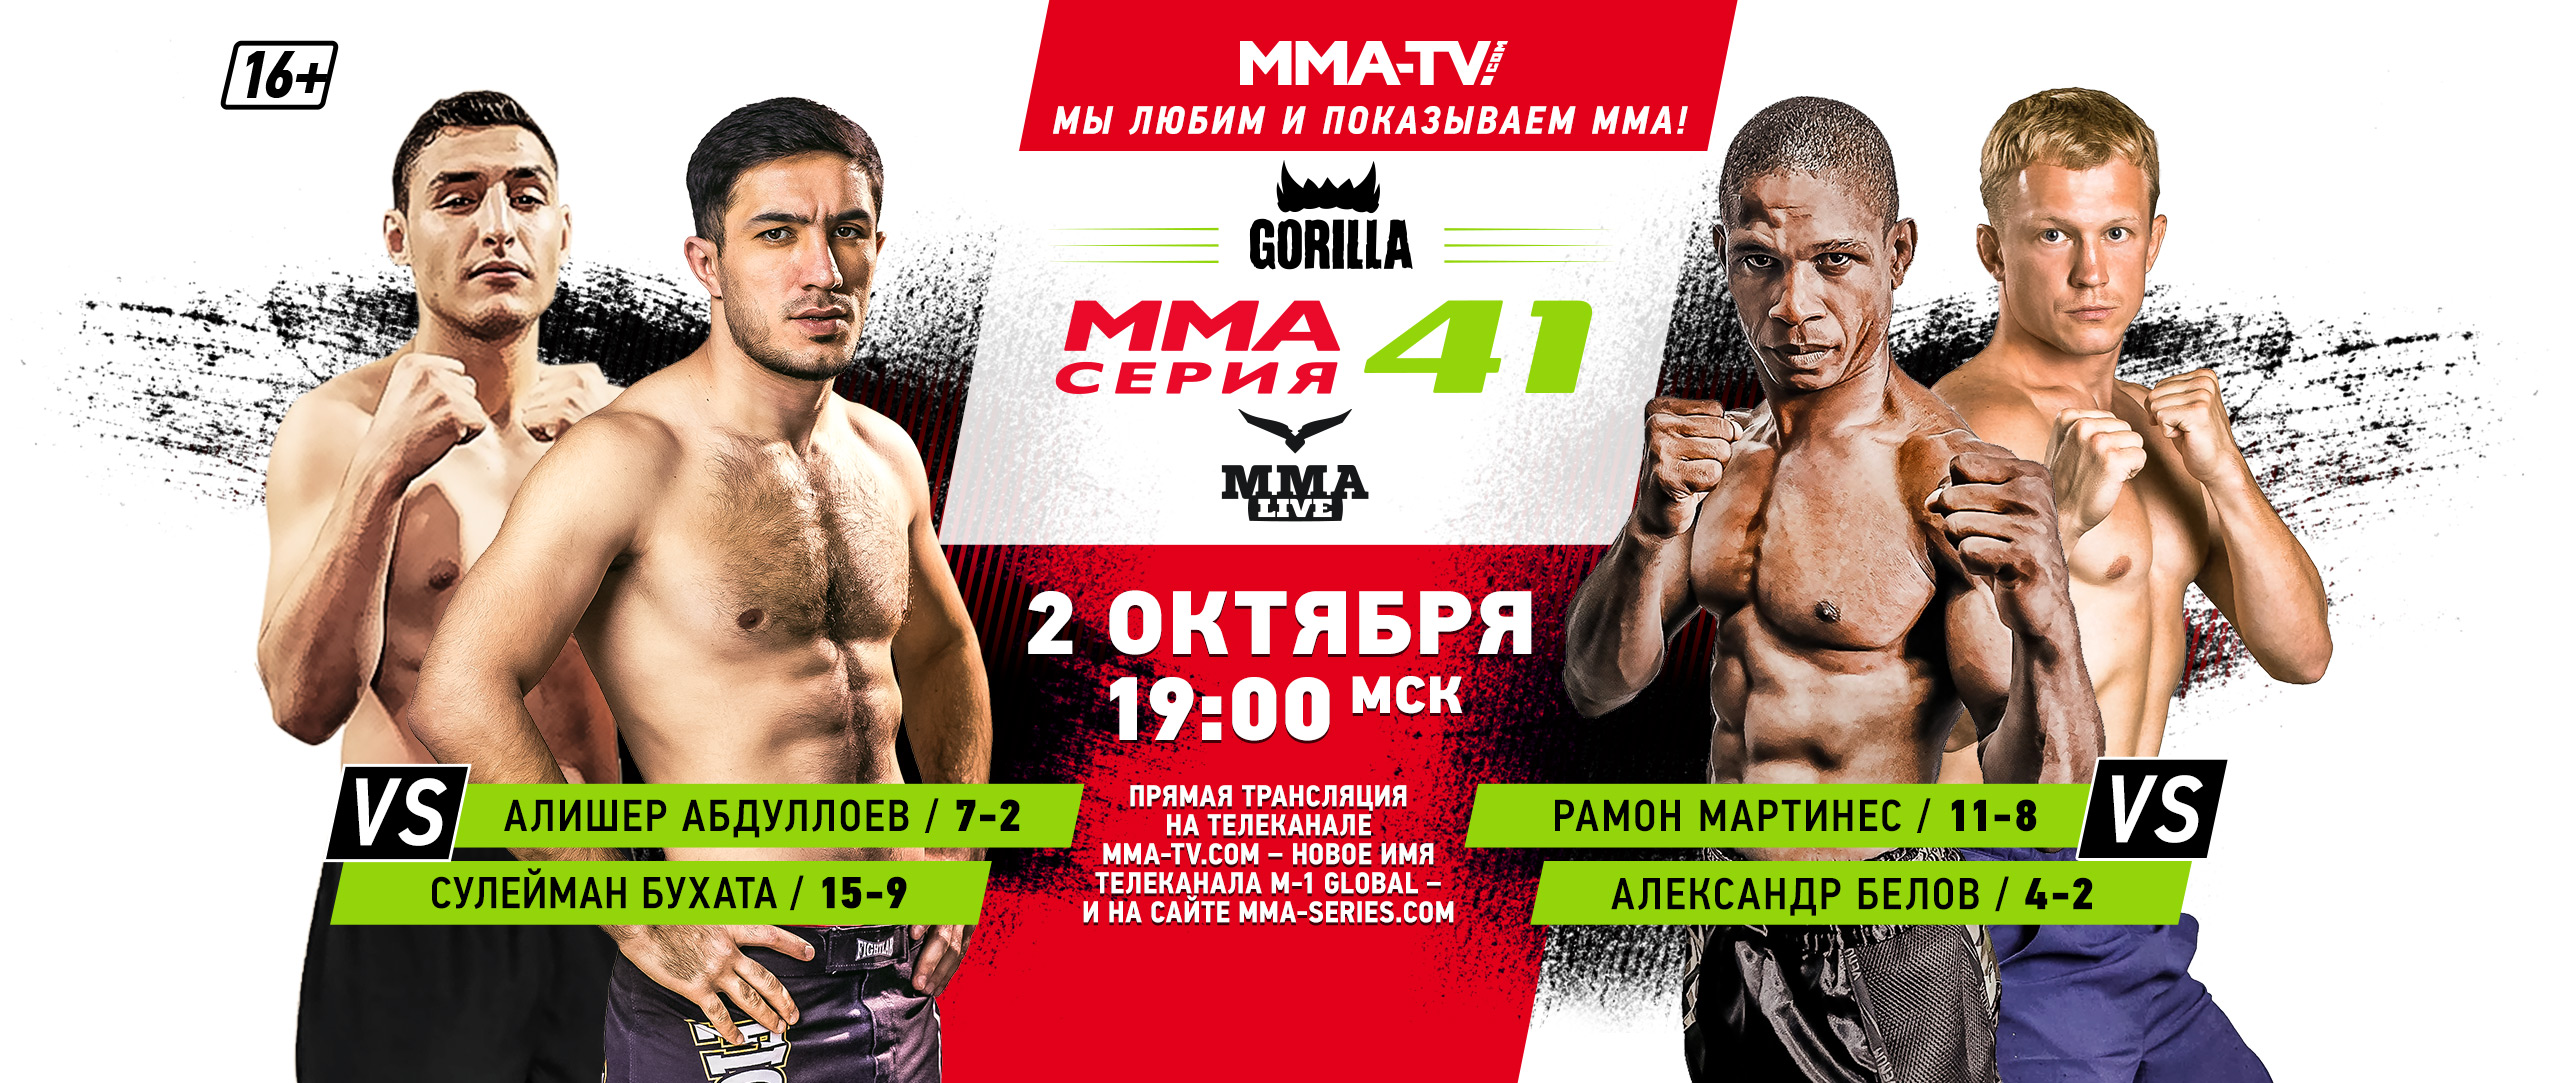 Gorilla MMA Series — 41 MMA Live 9 MMA Series official website